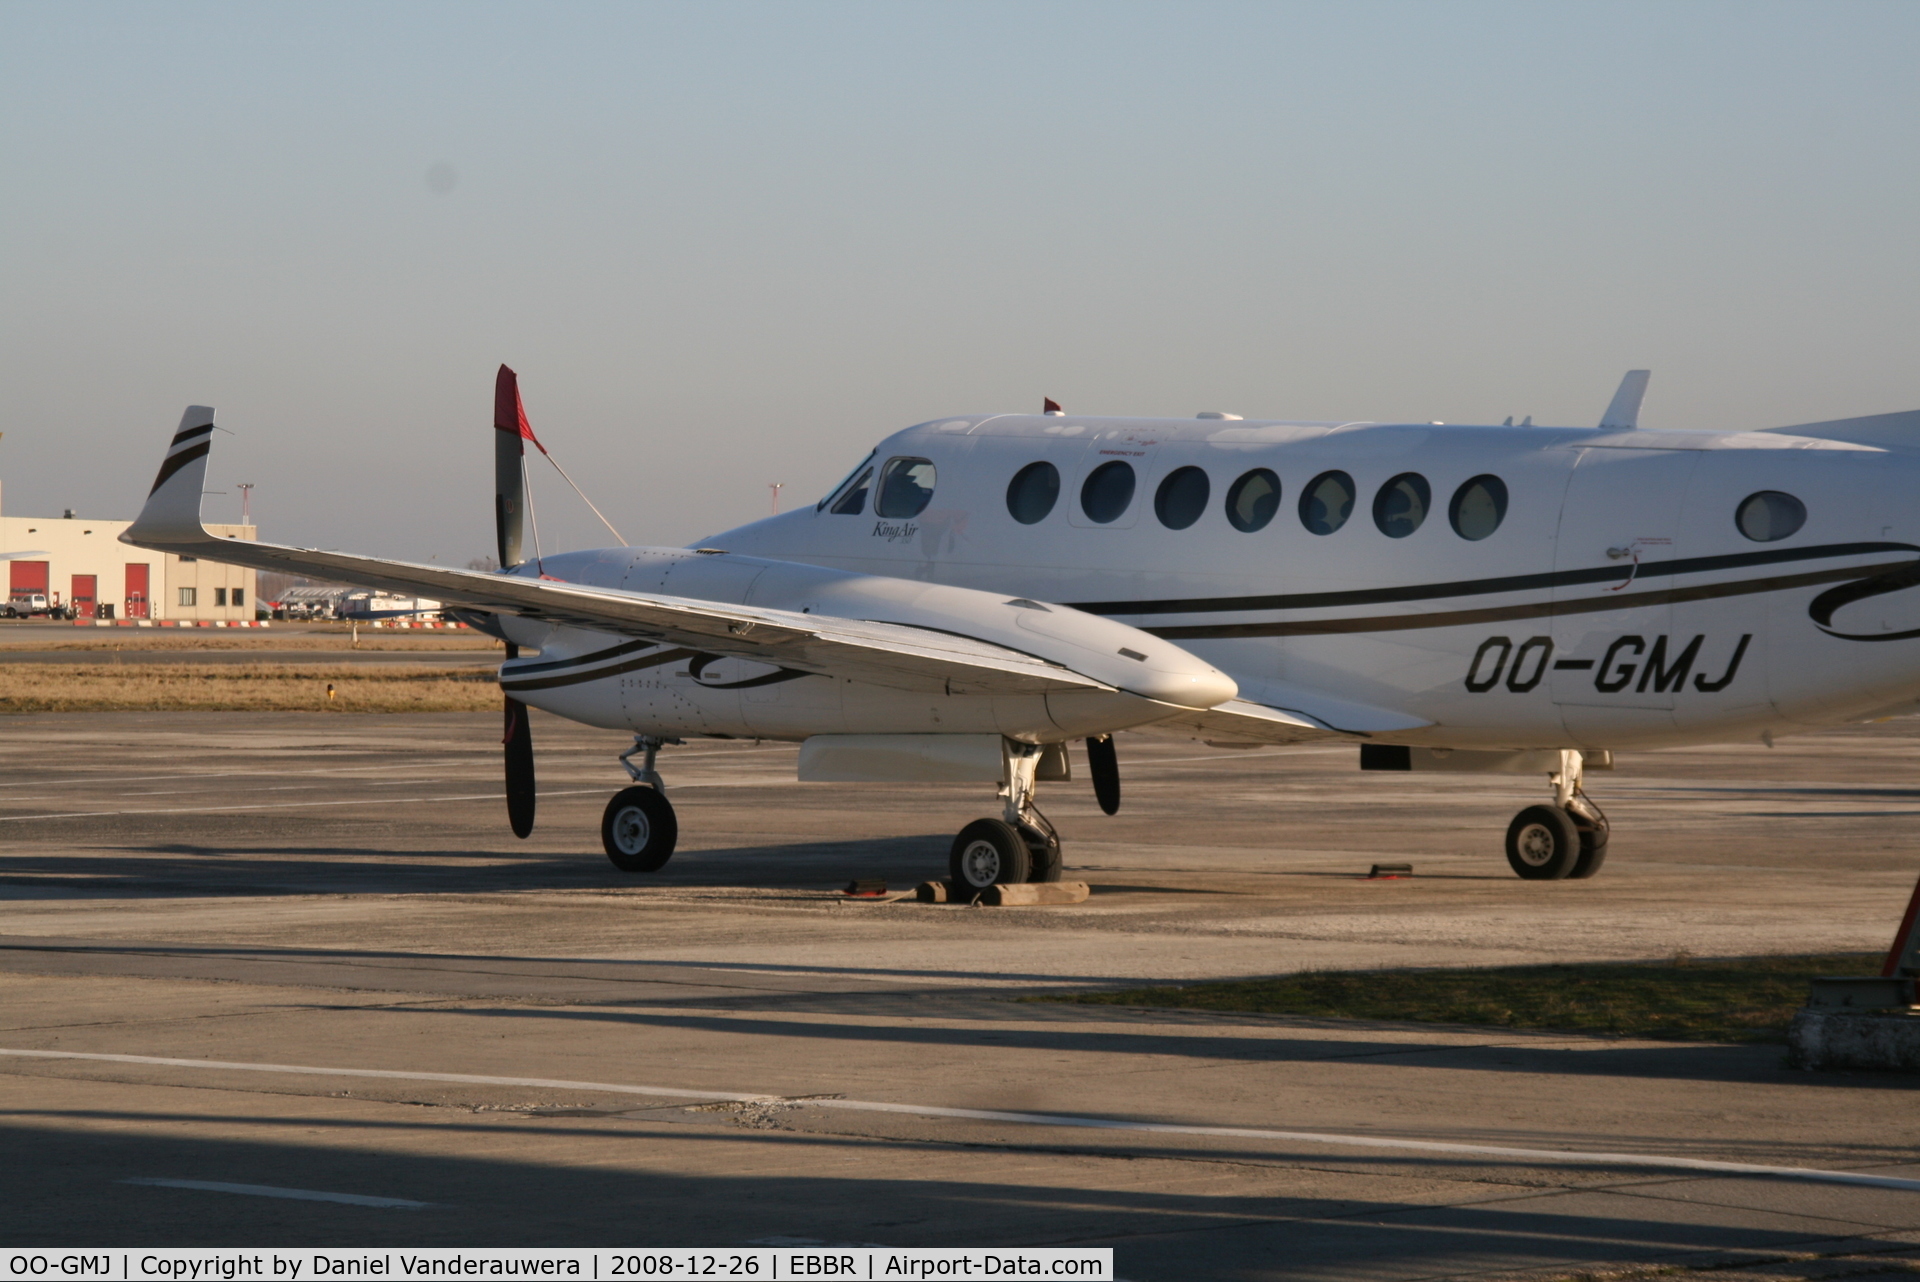 OO-GMJ, 2005 Raytheon Aircraft Company B300 C/N FL-460, parked on General Aviation apron (Abelag)